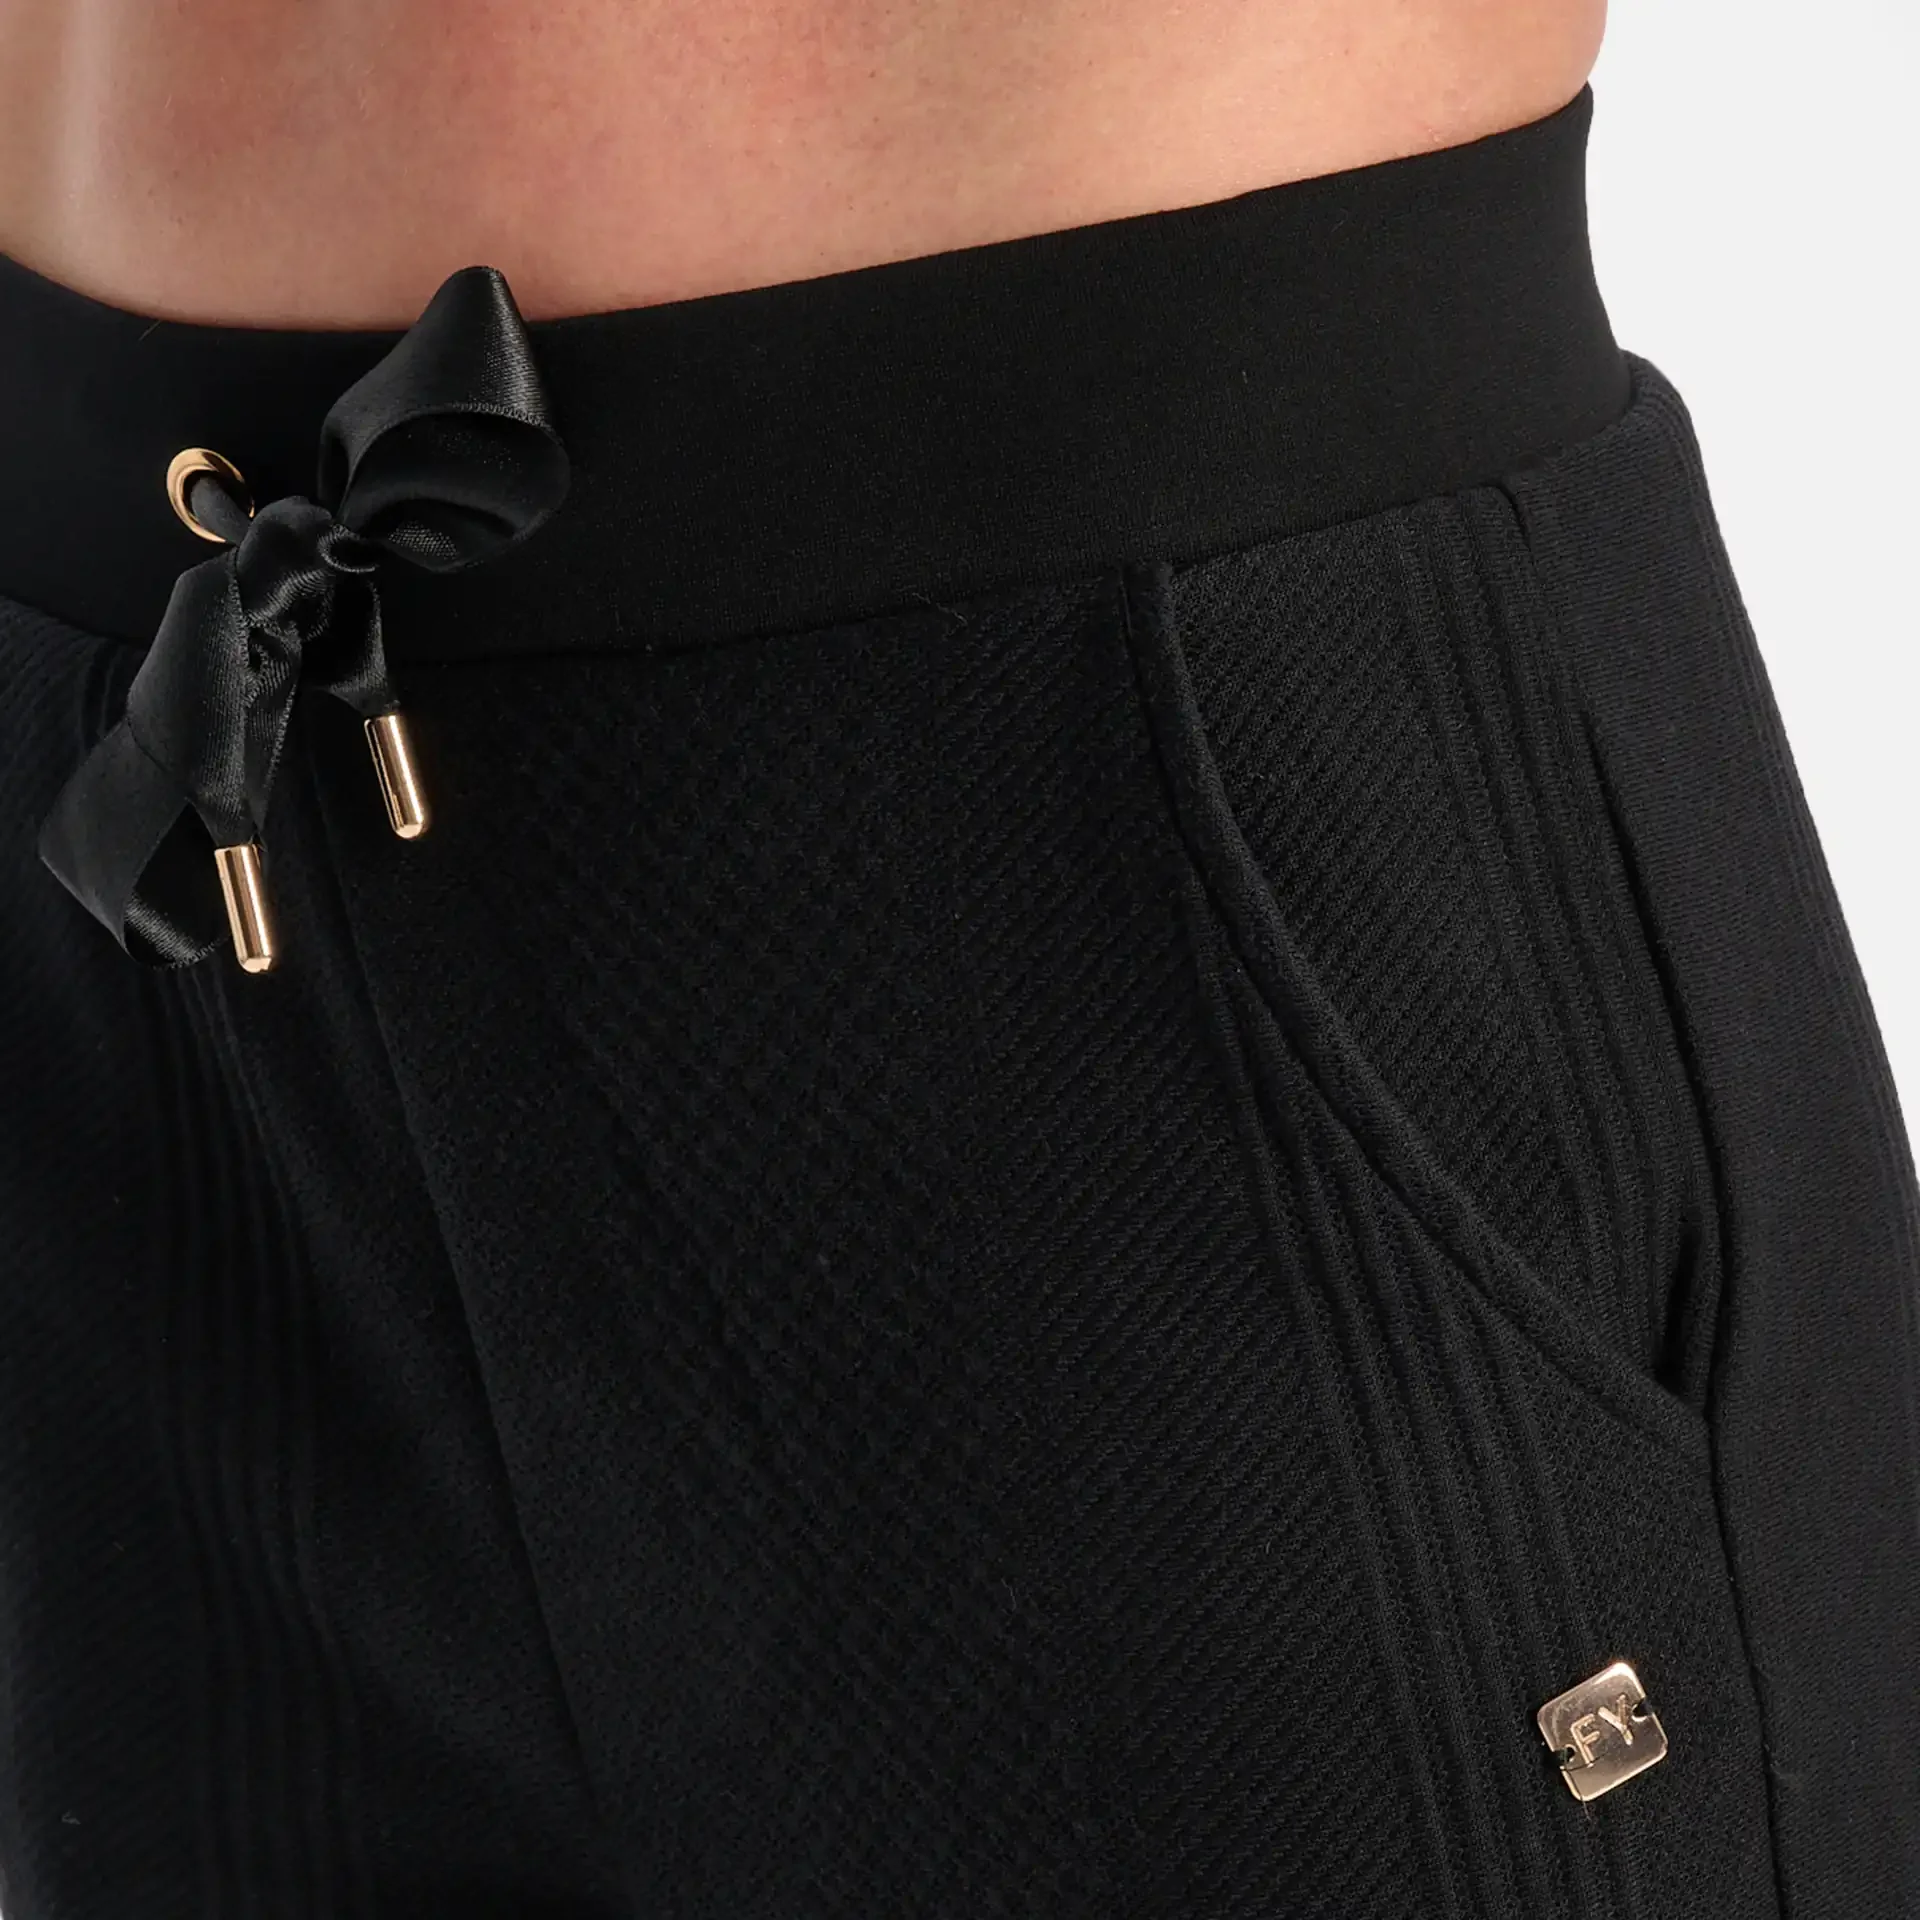 Freddy Slounge Bonded Fleece Pants Cable Knit Look Black